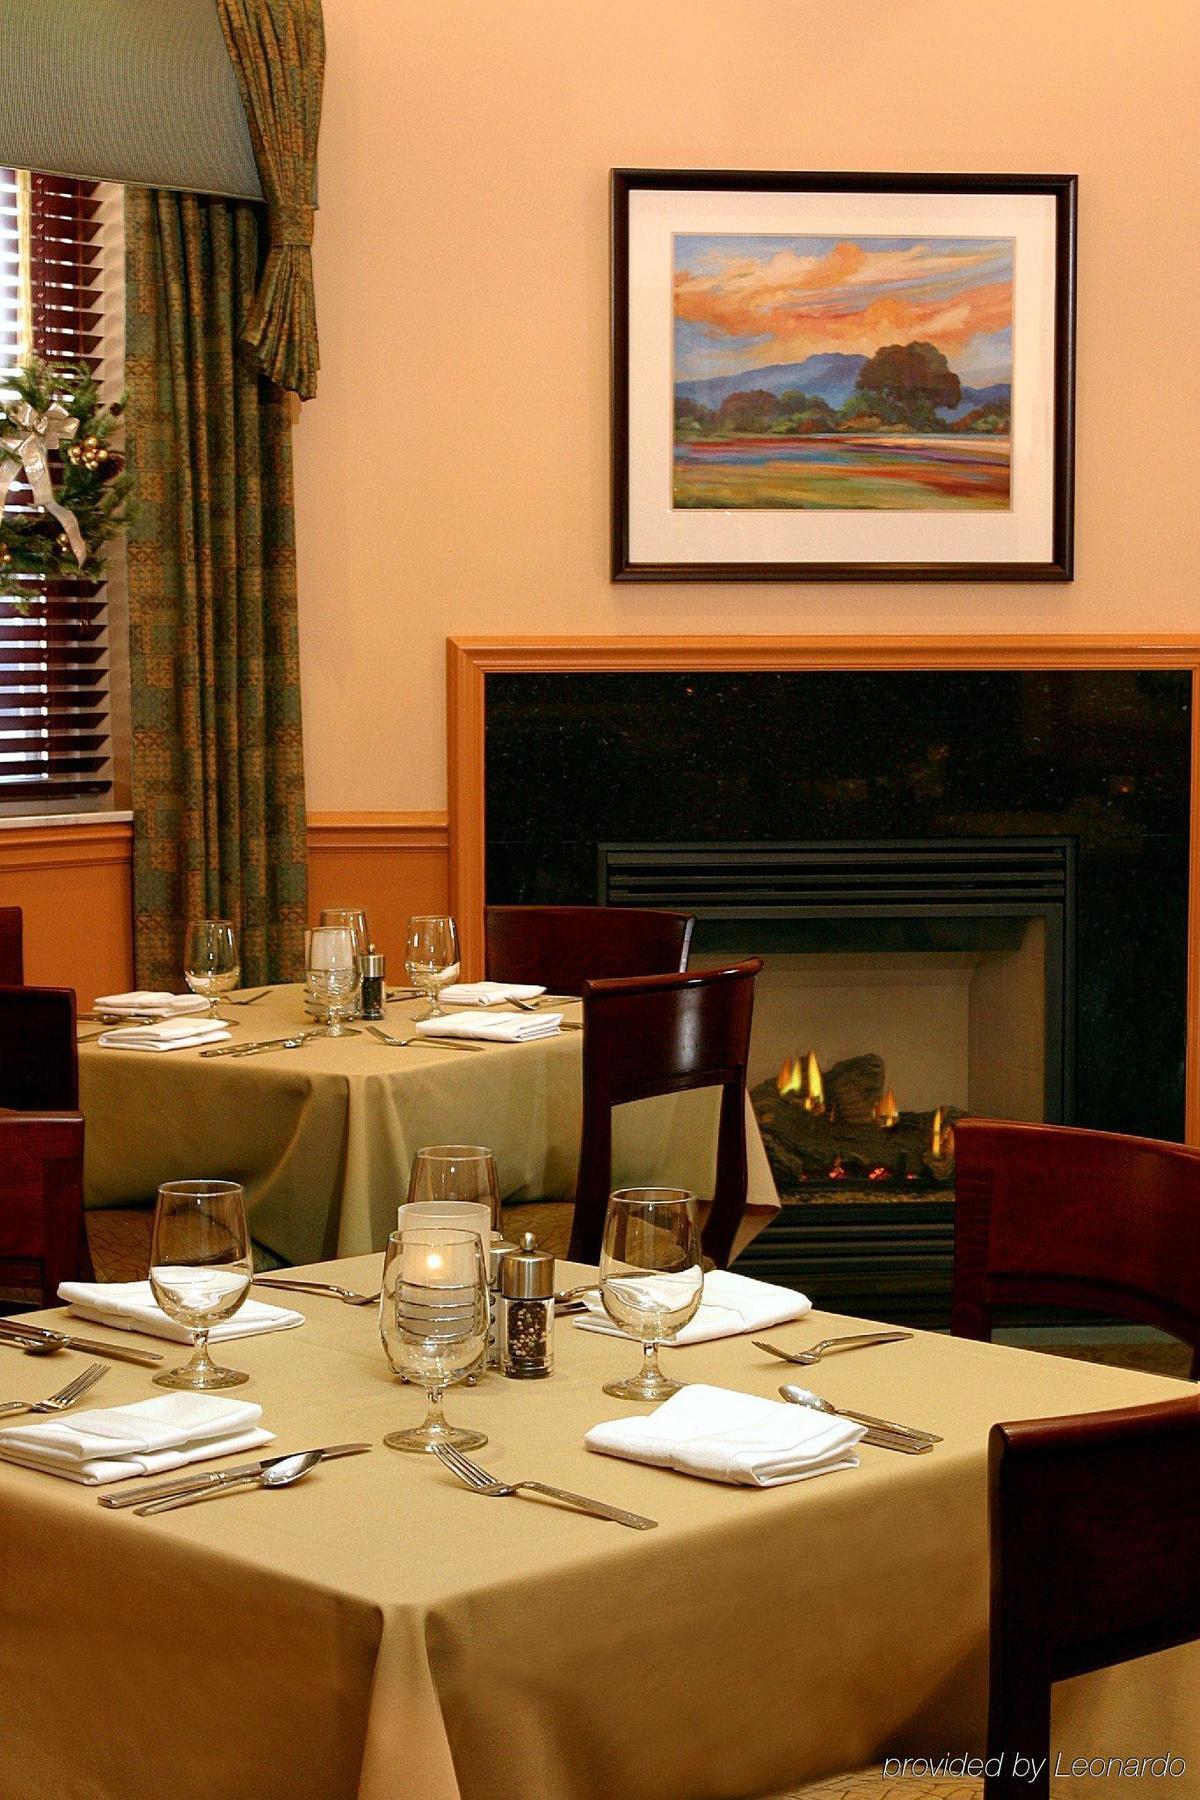 Ambassador Inn Milwaukee Restaurant photo